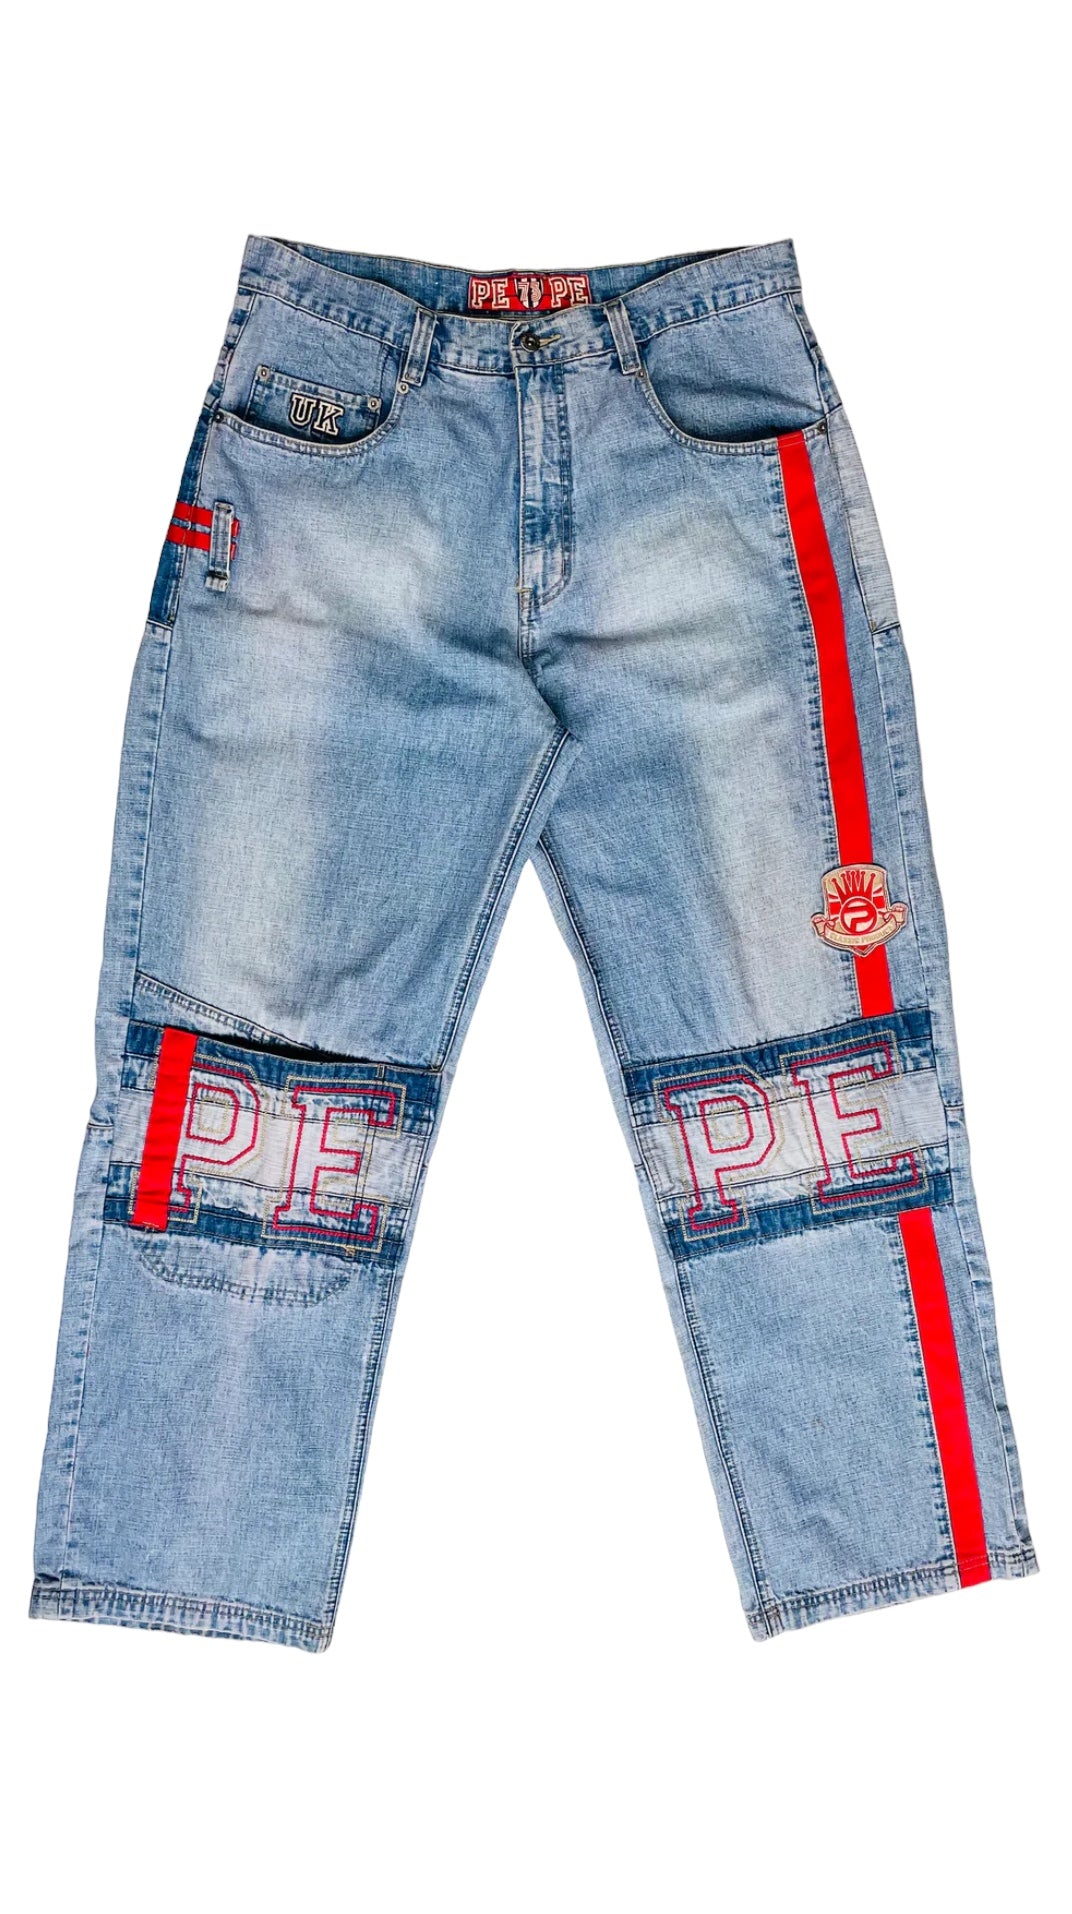 Vintage 90s blue straight leg PEPE jeans - Size 38